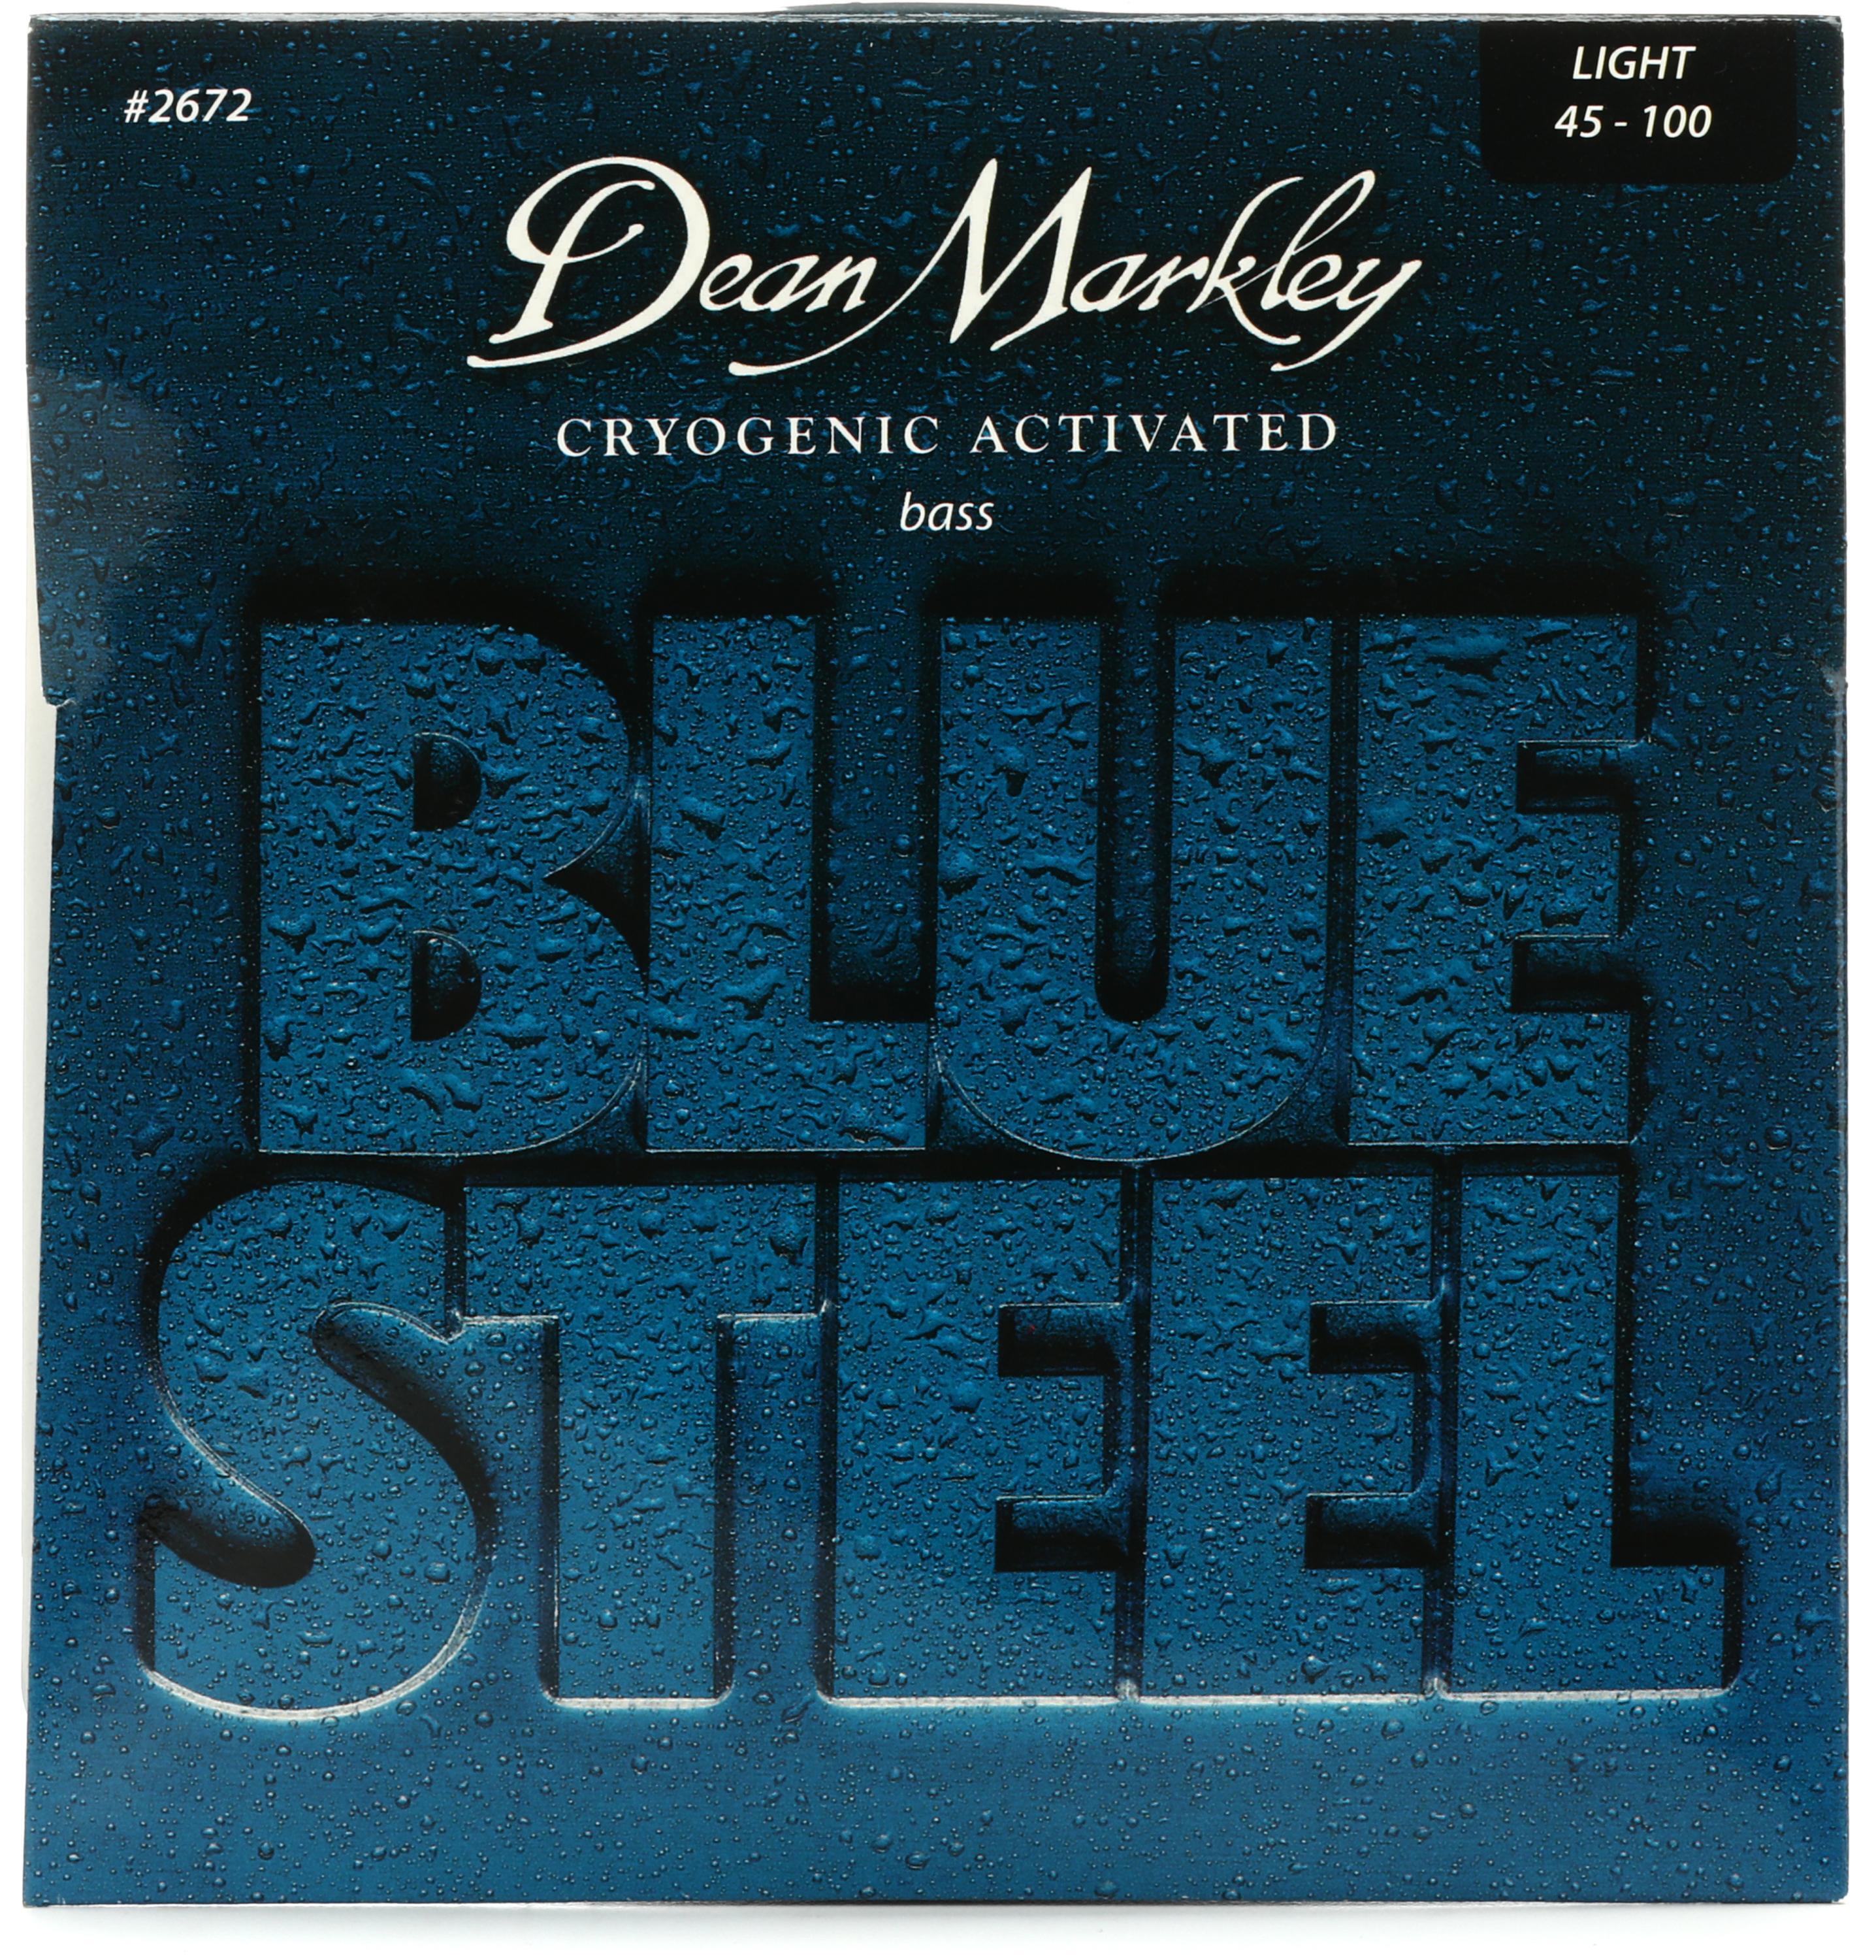 Bundled Item: Dean Markley 2672 Blue Steel Bass Guitar Strings - .045-.100 Light